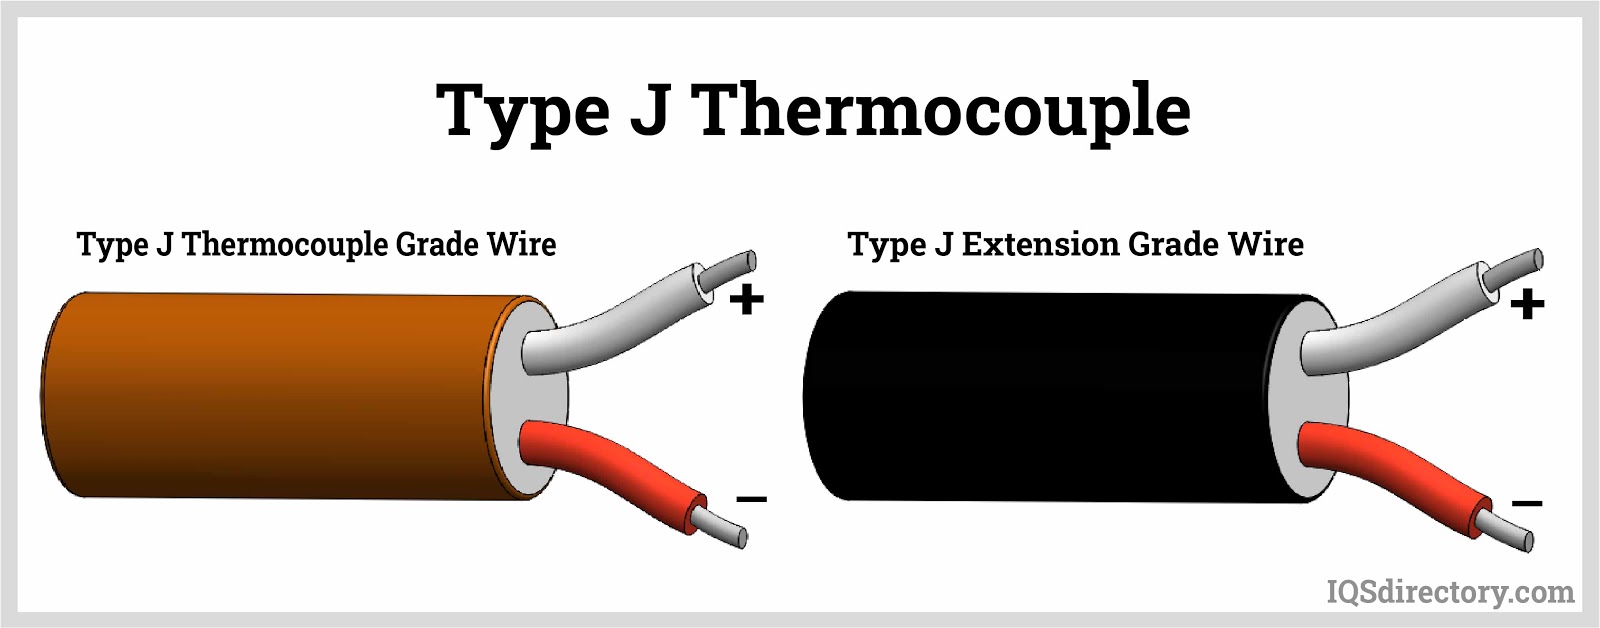 Type J Thermocouple